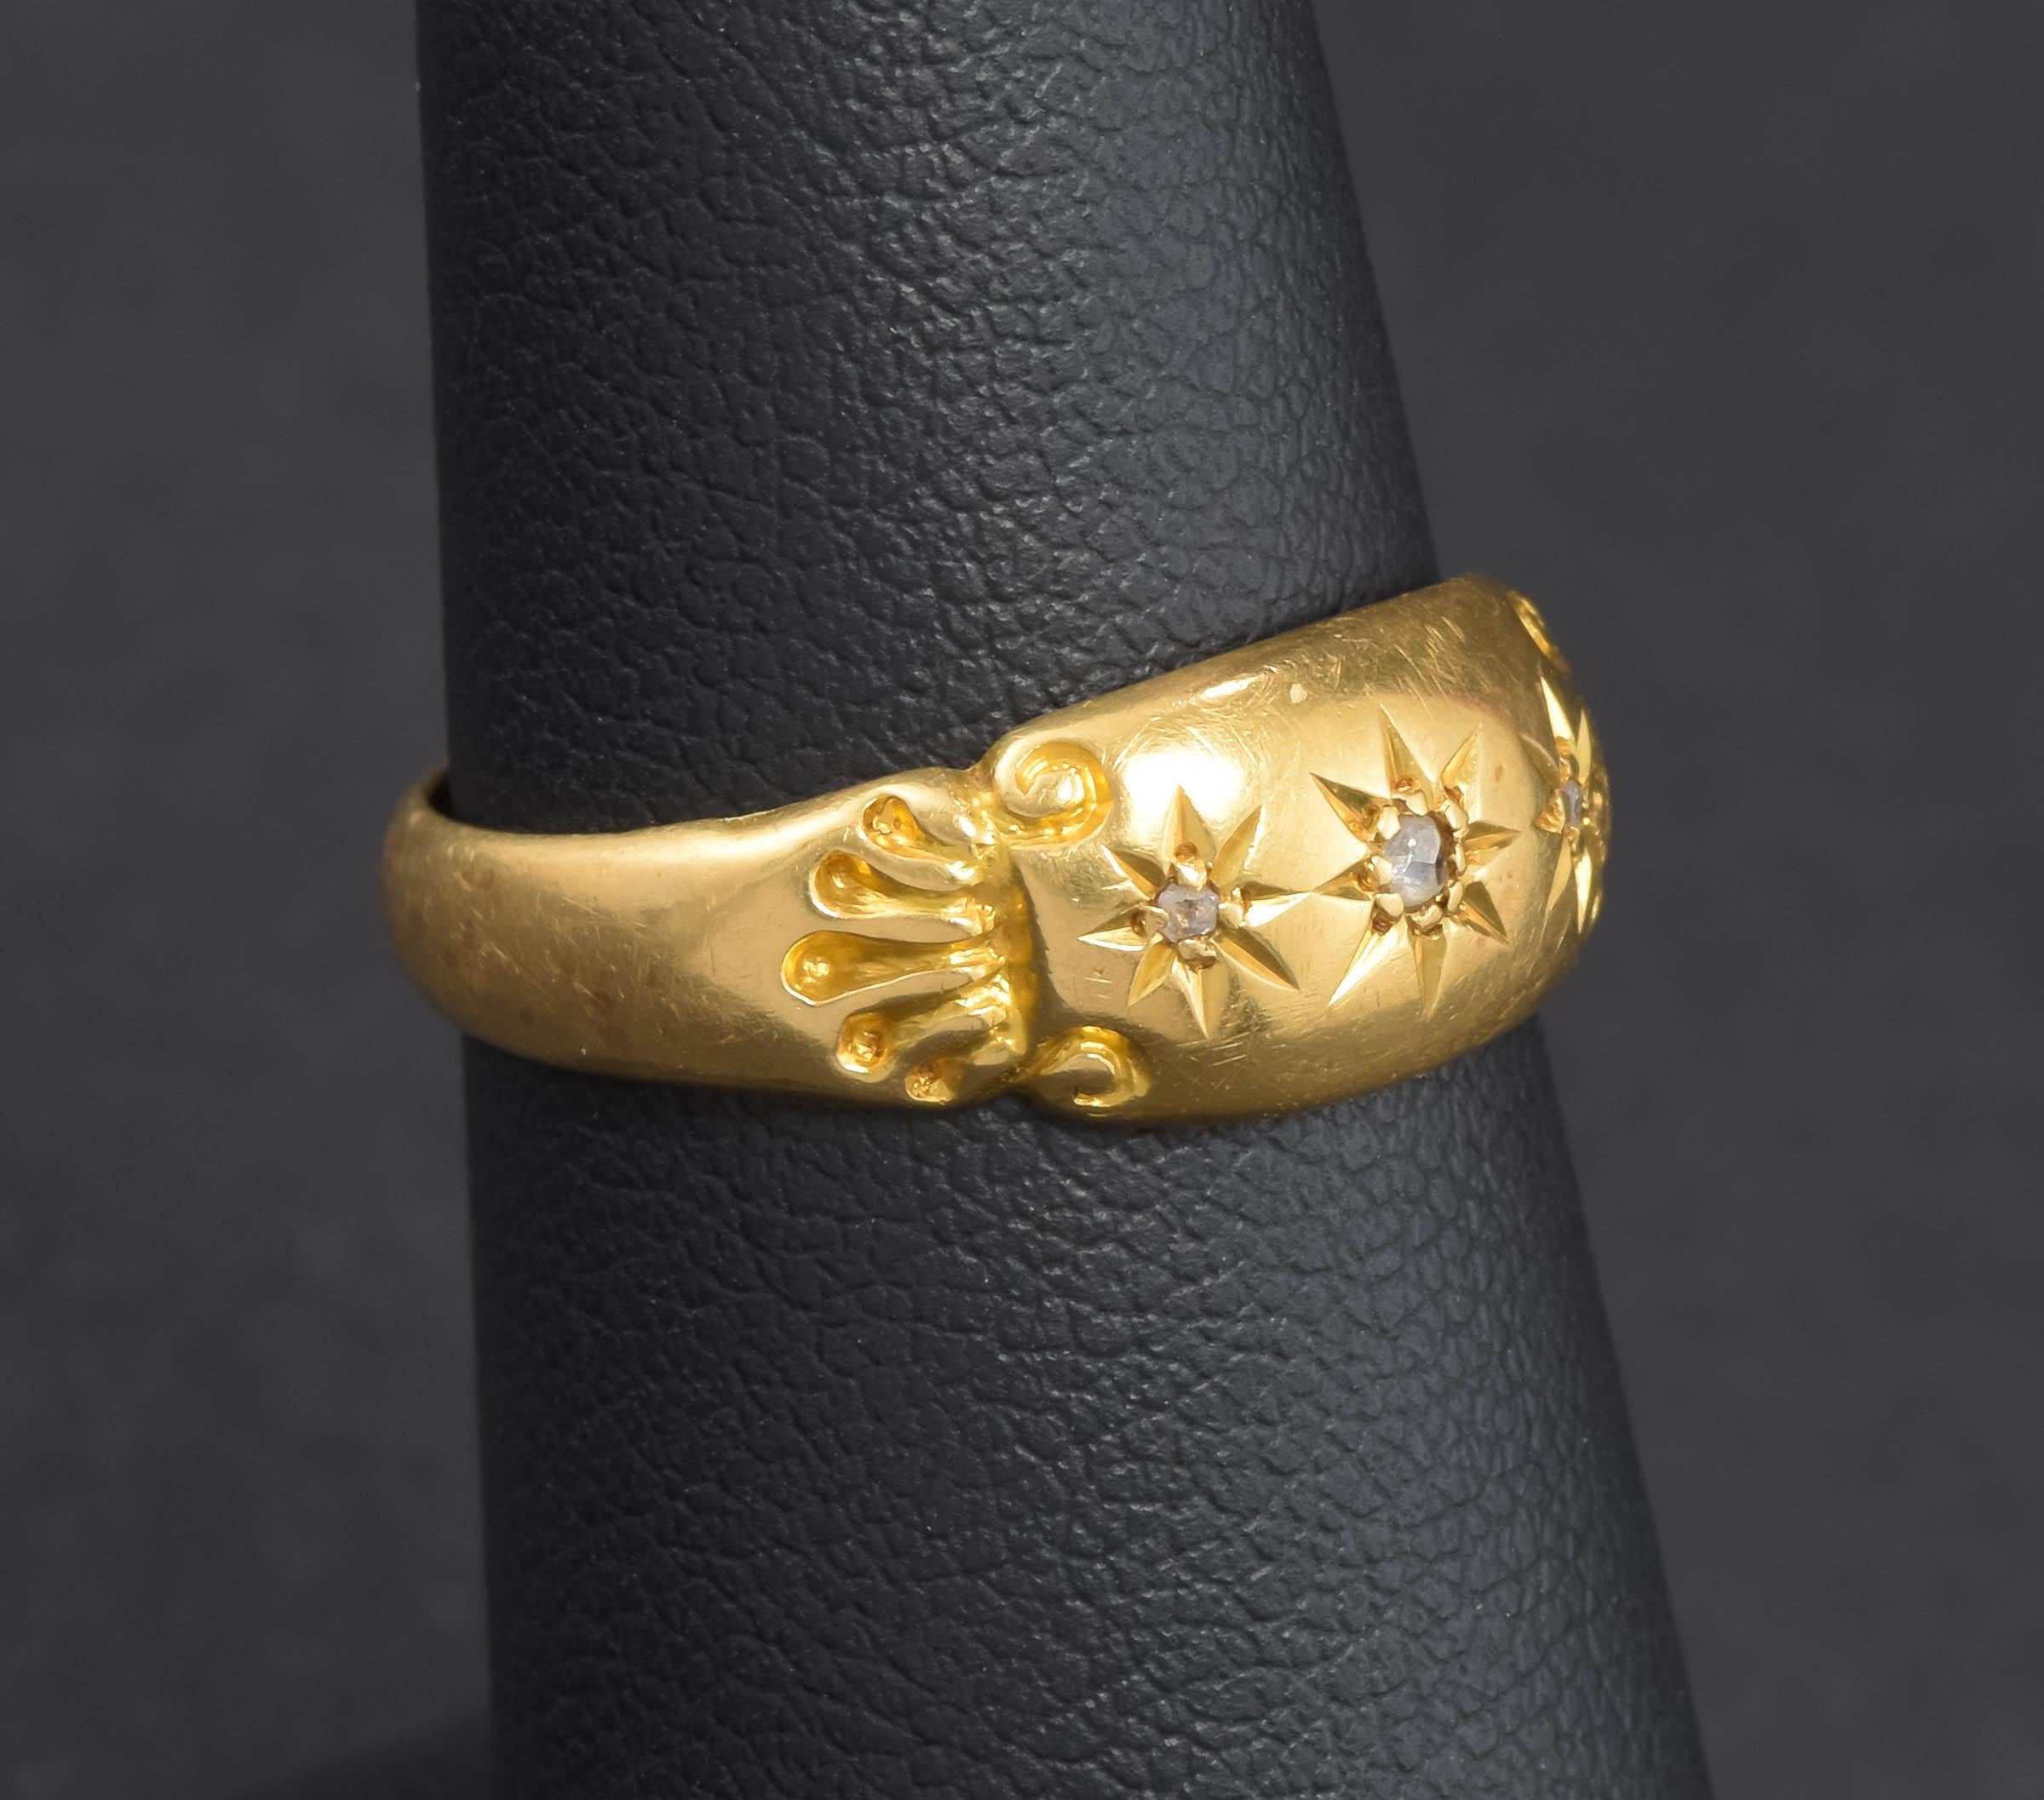 Victorian Edwardian 18K Gold Diamond Band Ring, Hallmarked Chester 1910 - 1911